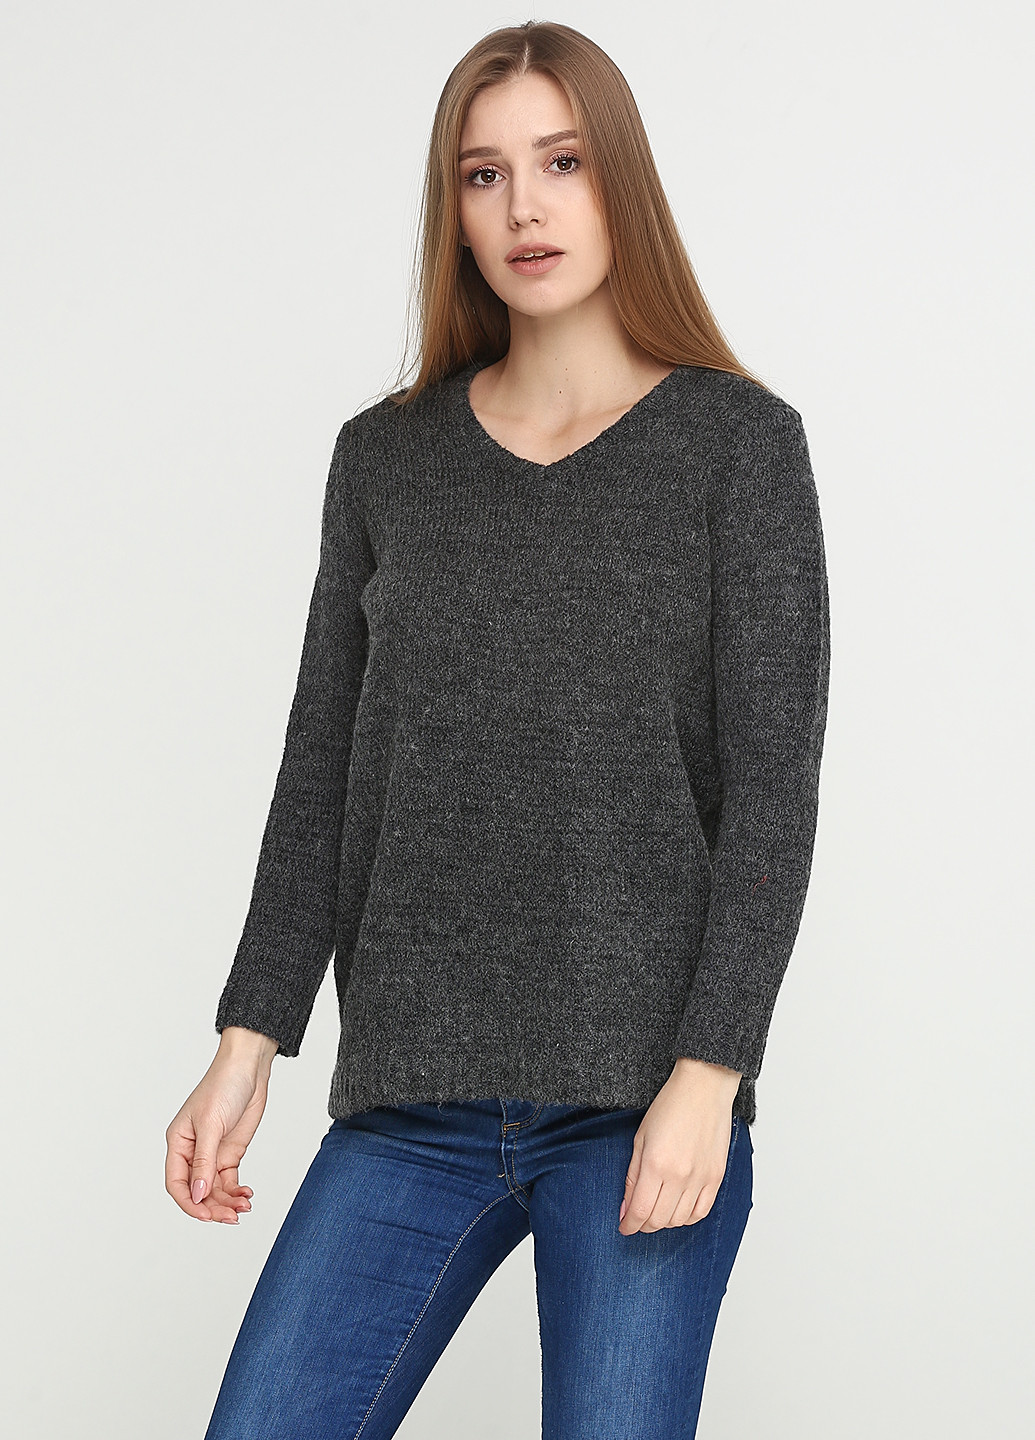 Серый демисезонный пуловер пуловер Long Island